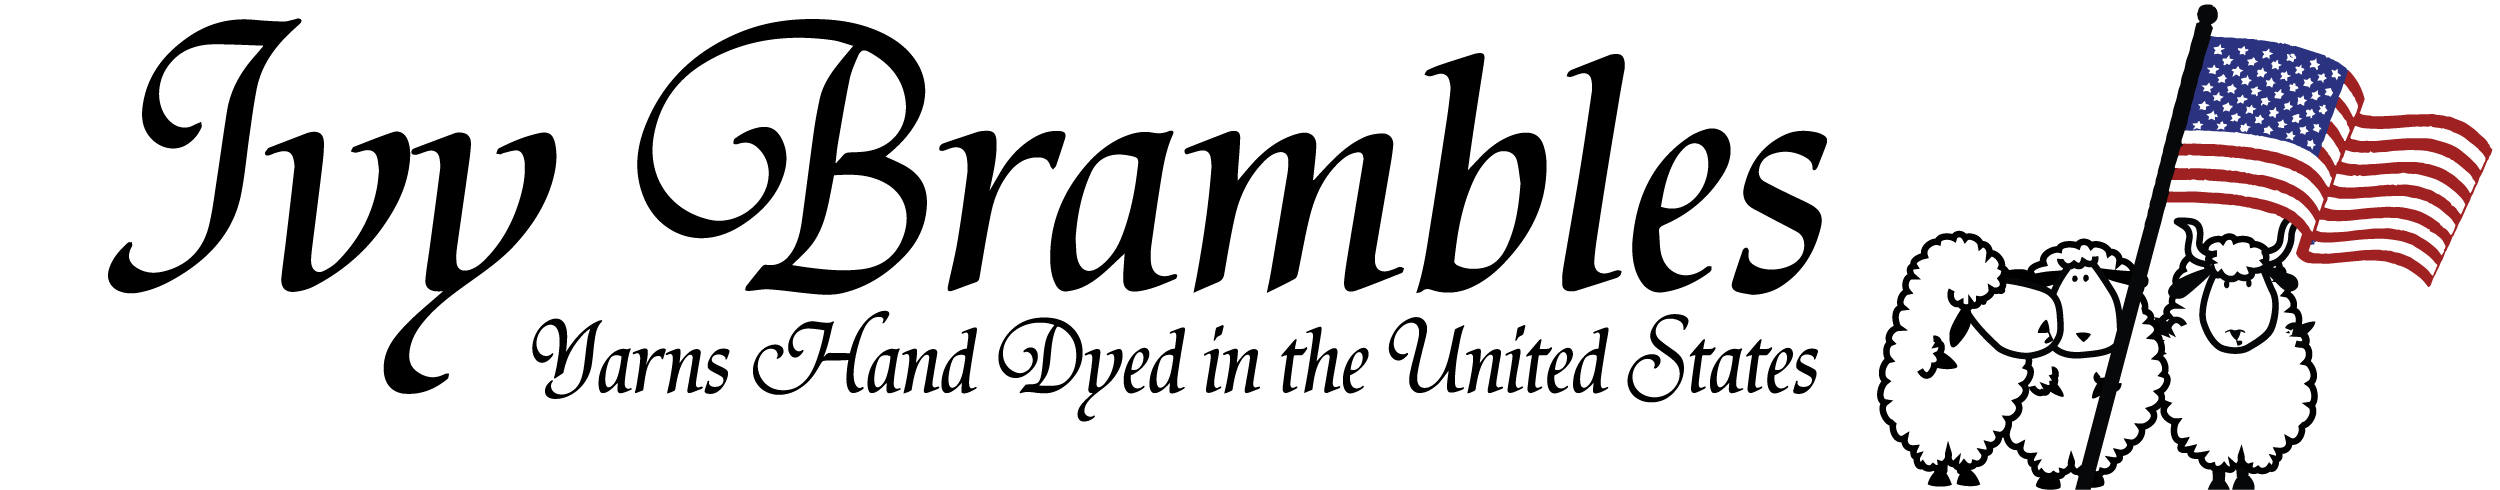 Ivy Brambles Cashmere 2-Ply Yarn